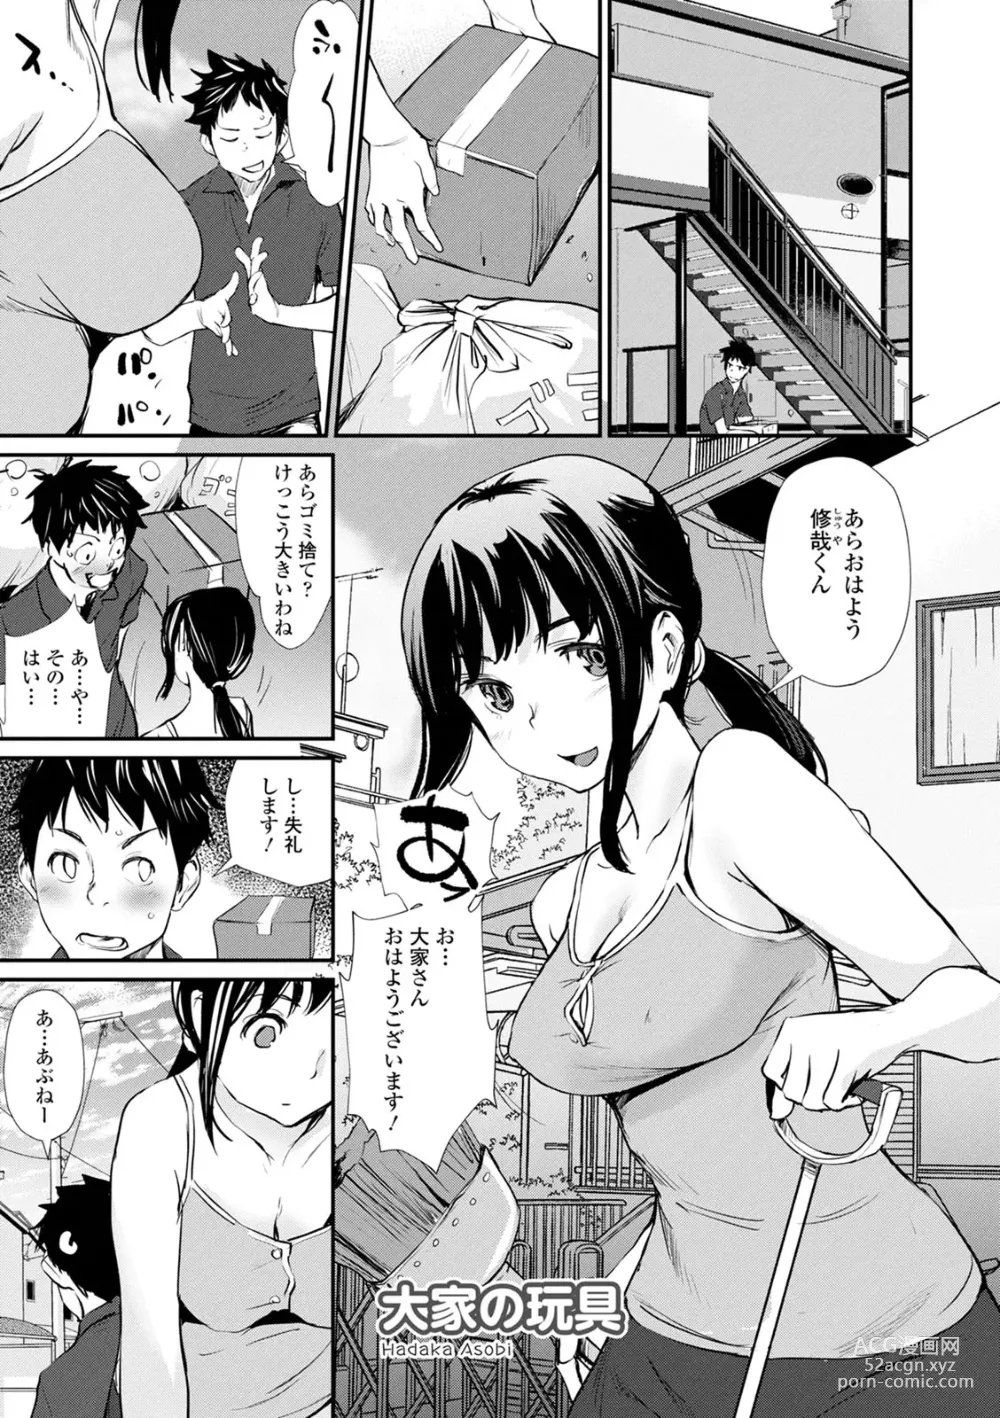 Page 5 of manga Hadaka Asobi